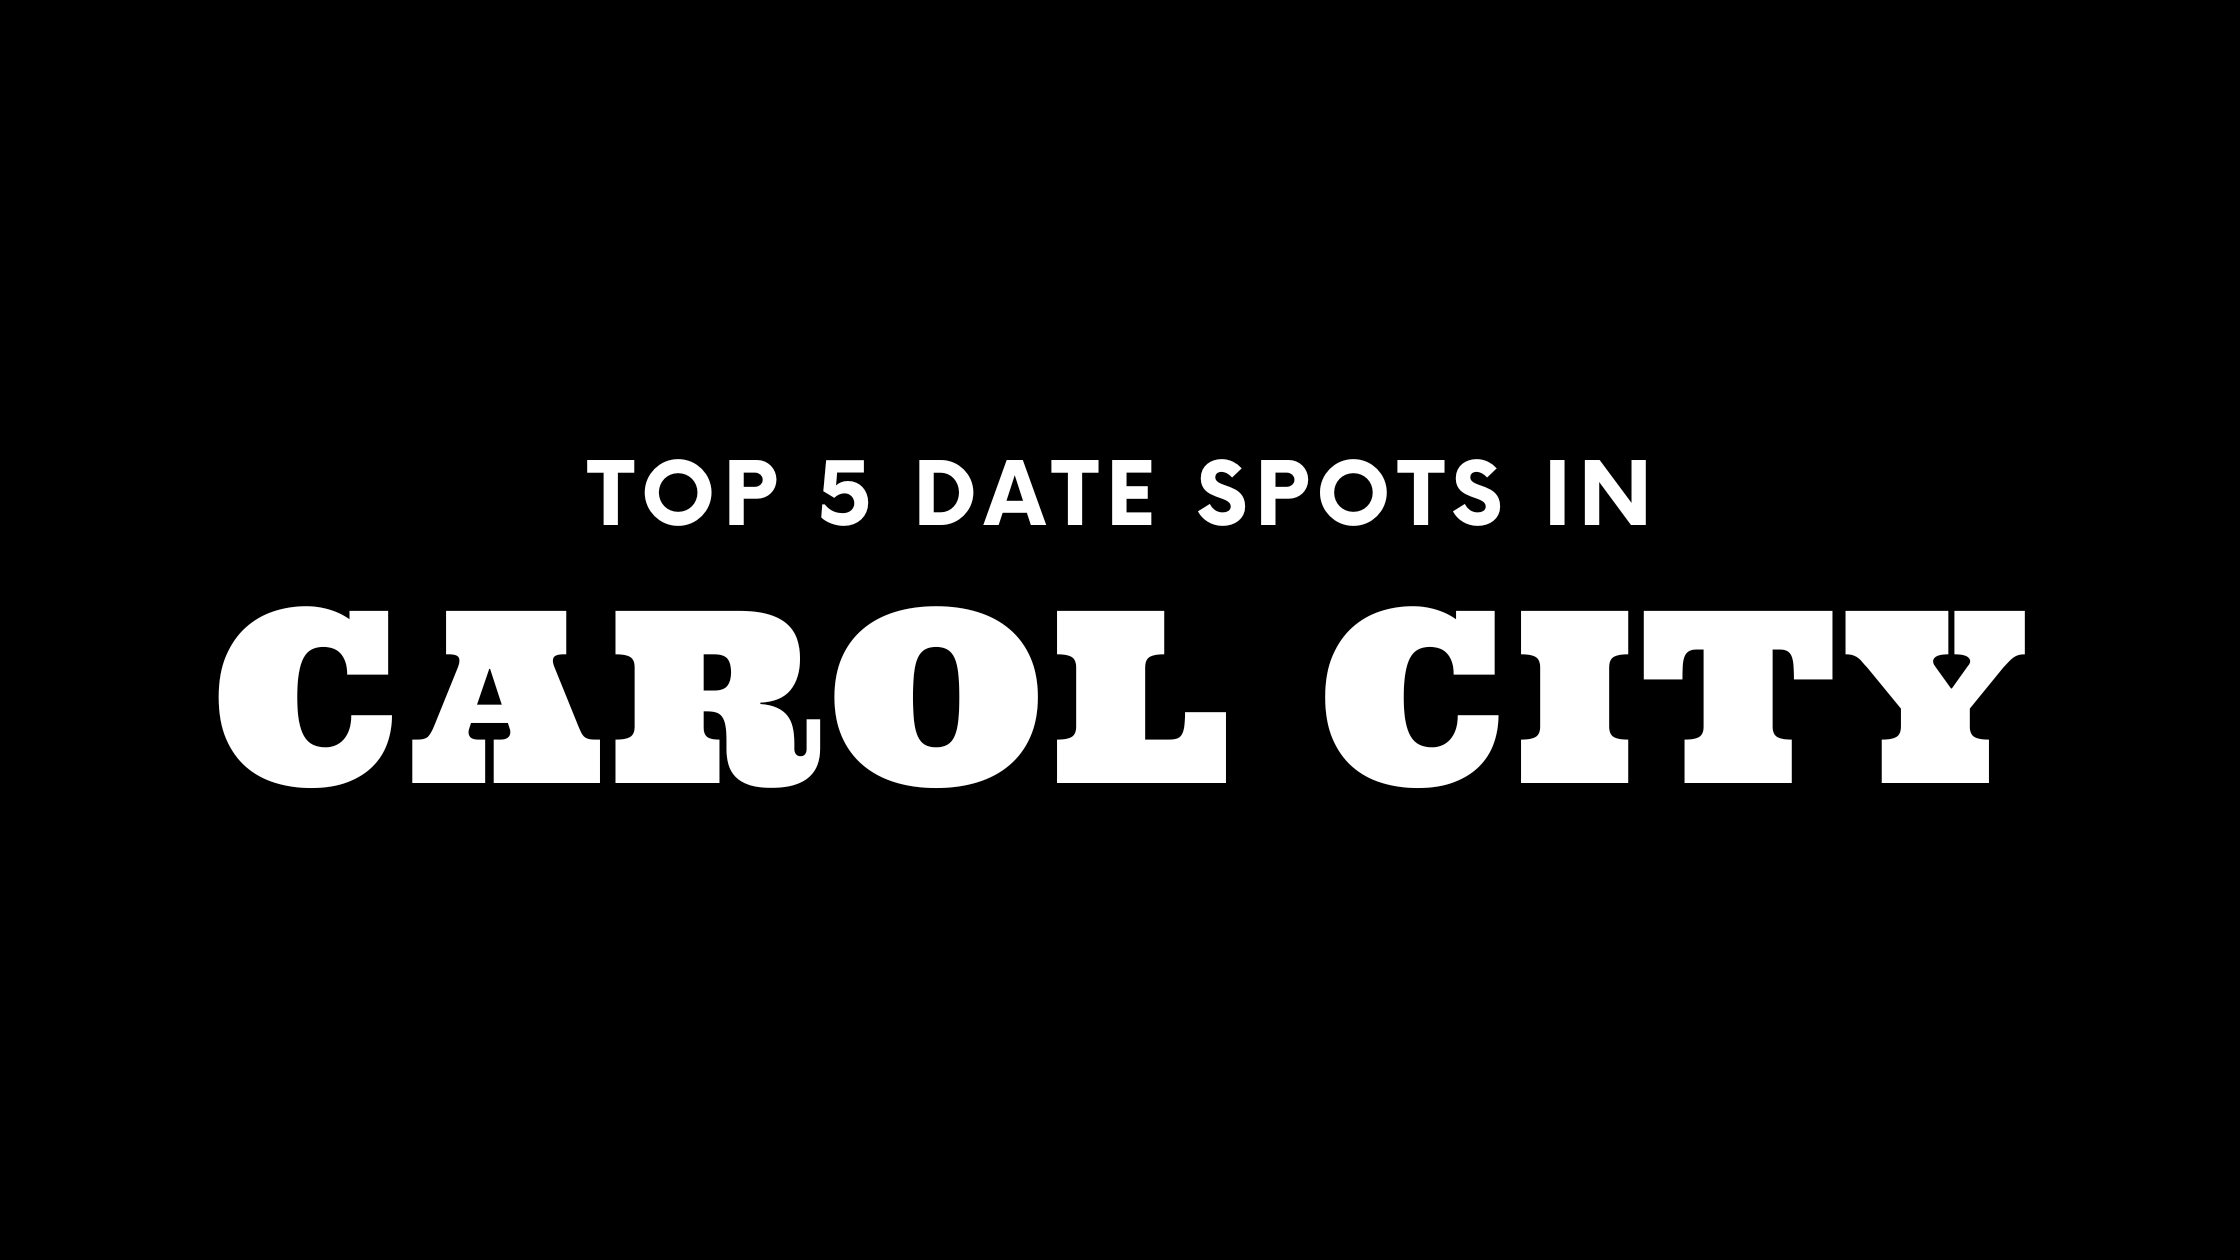 Top 5 Date Spots in Carol City